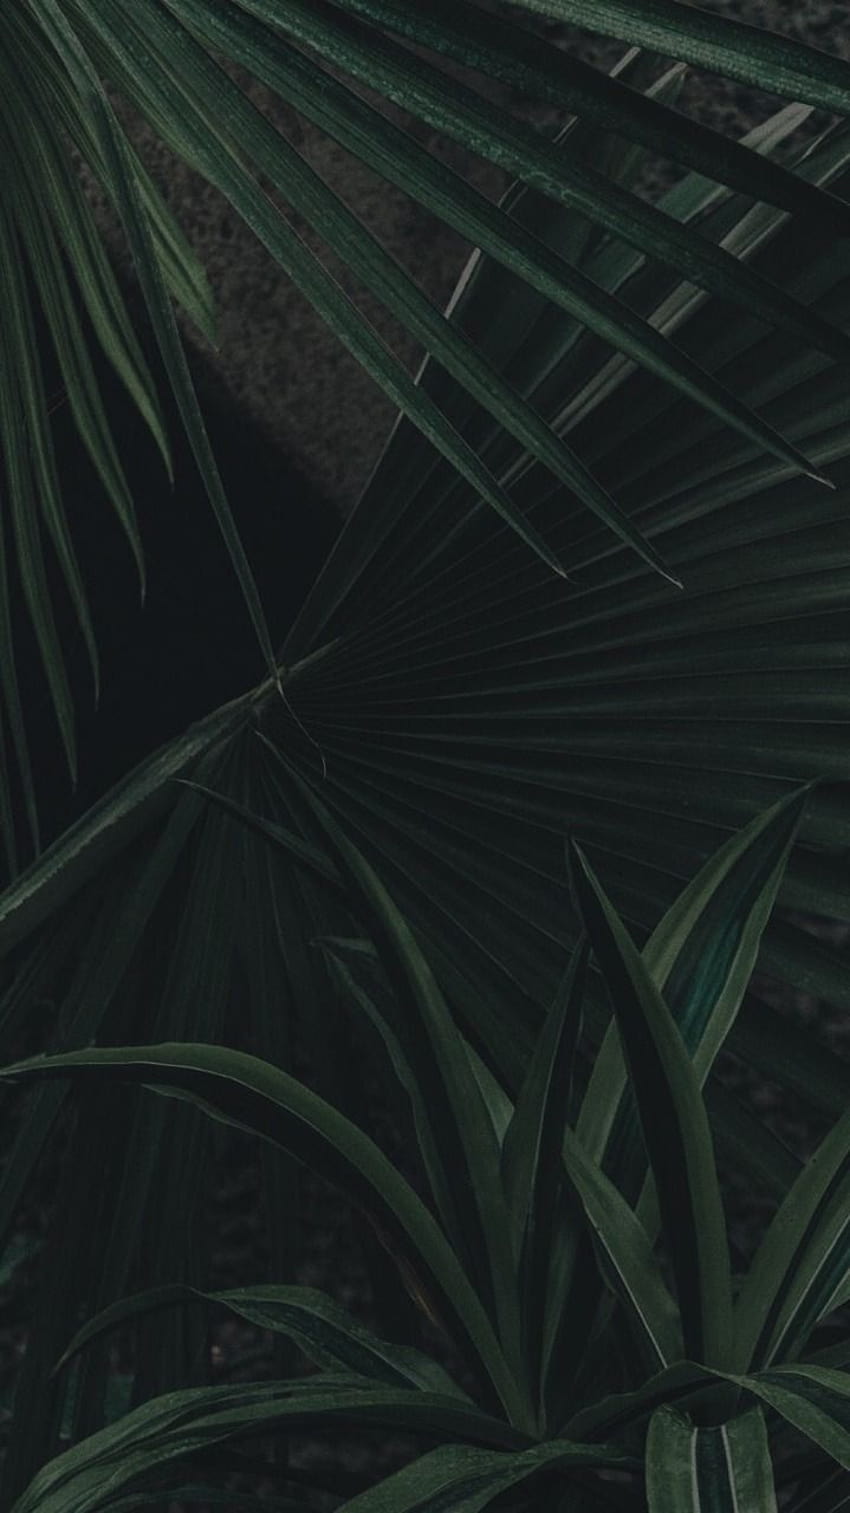 IPhone wallpaper of palm leaves in the dark - Dark green